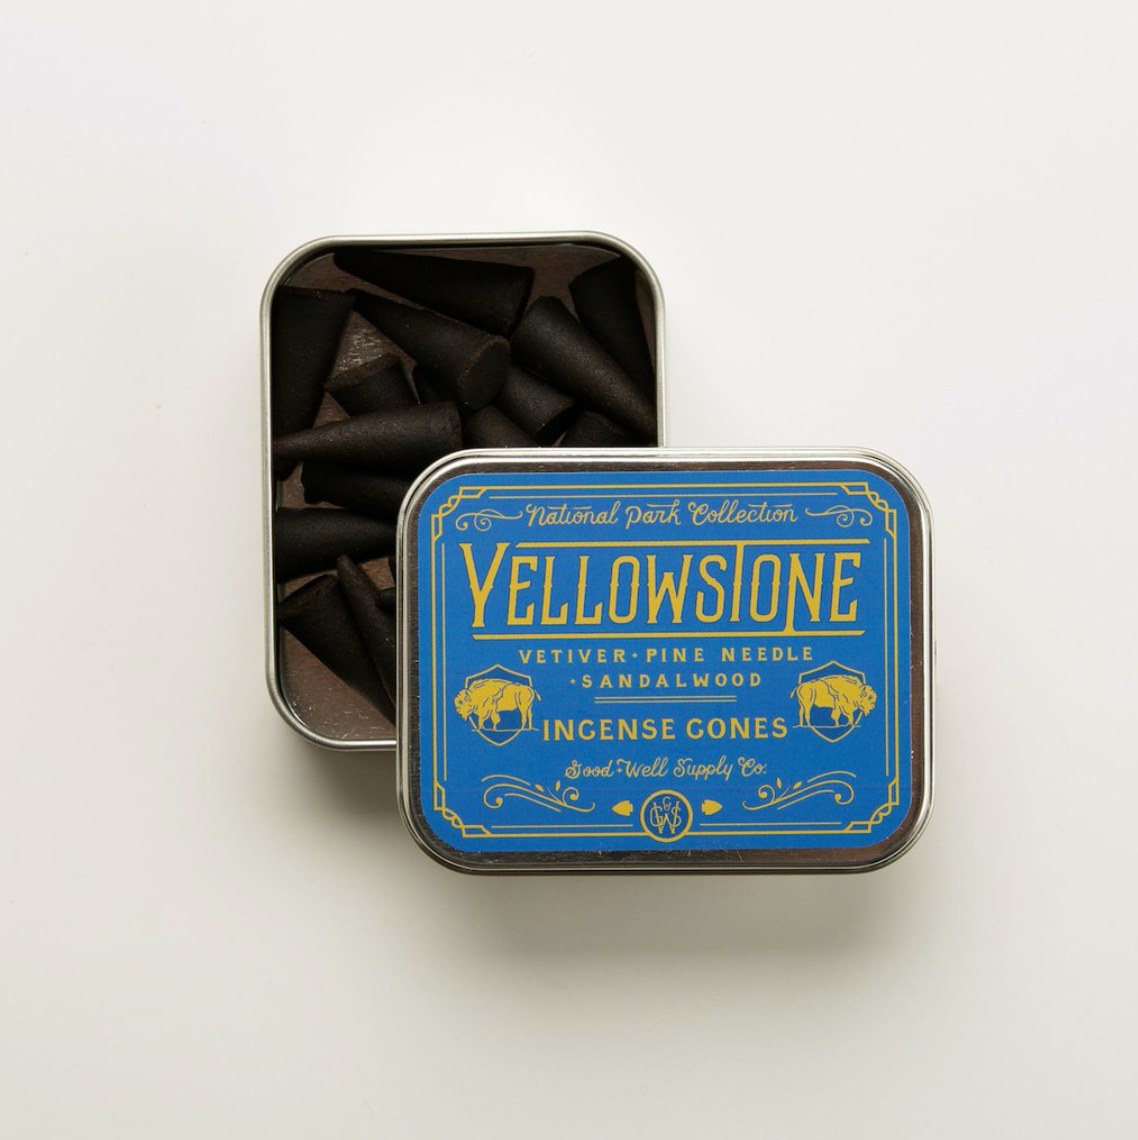 Yellowstone Incense Cones